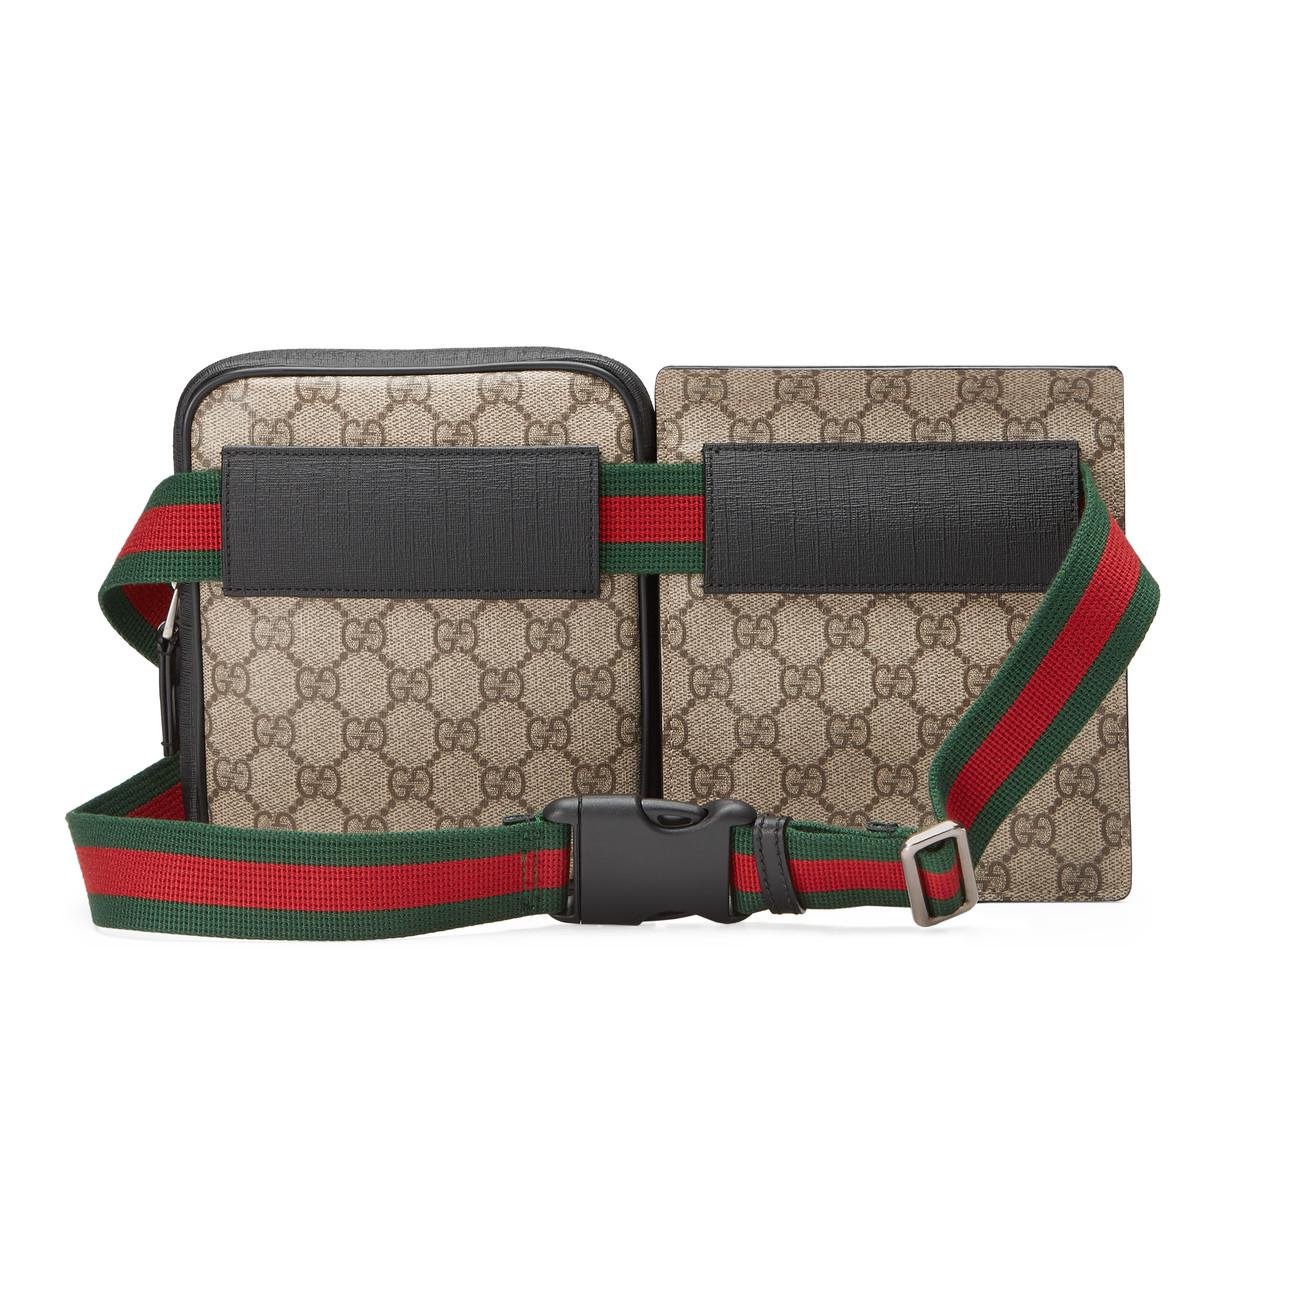 Gucci Canvas GG Supreme Belt Bag in Green for Men - Lyst